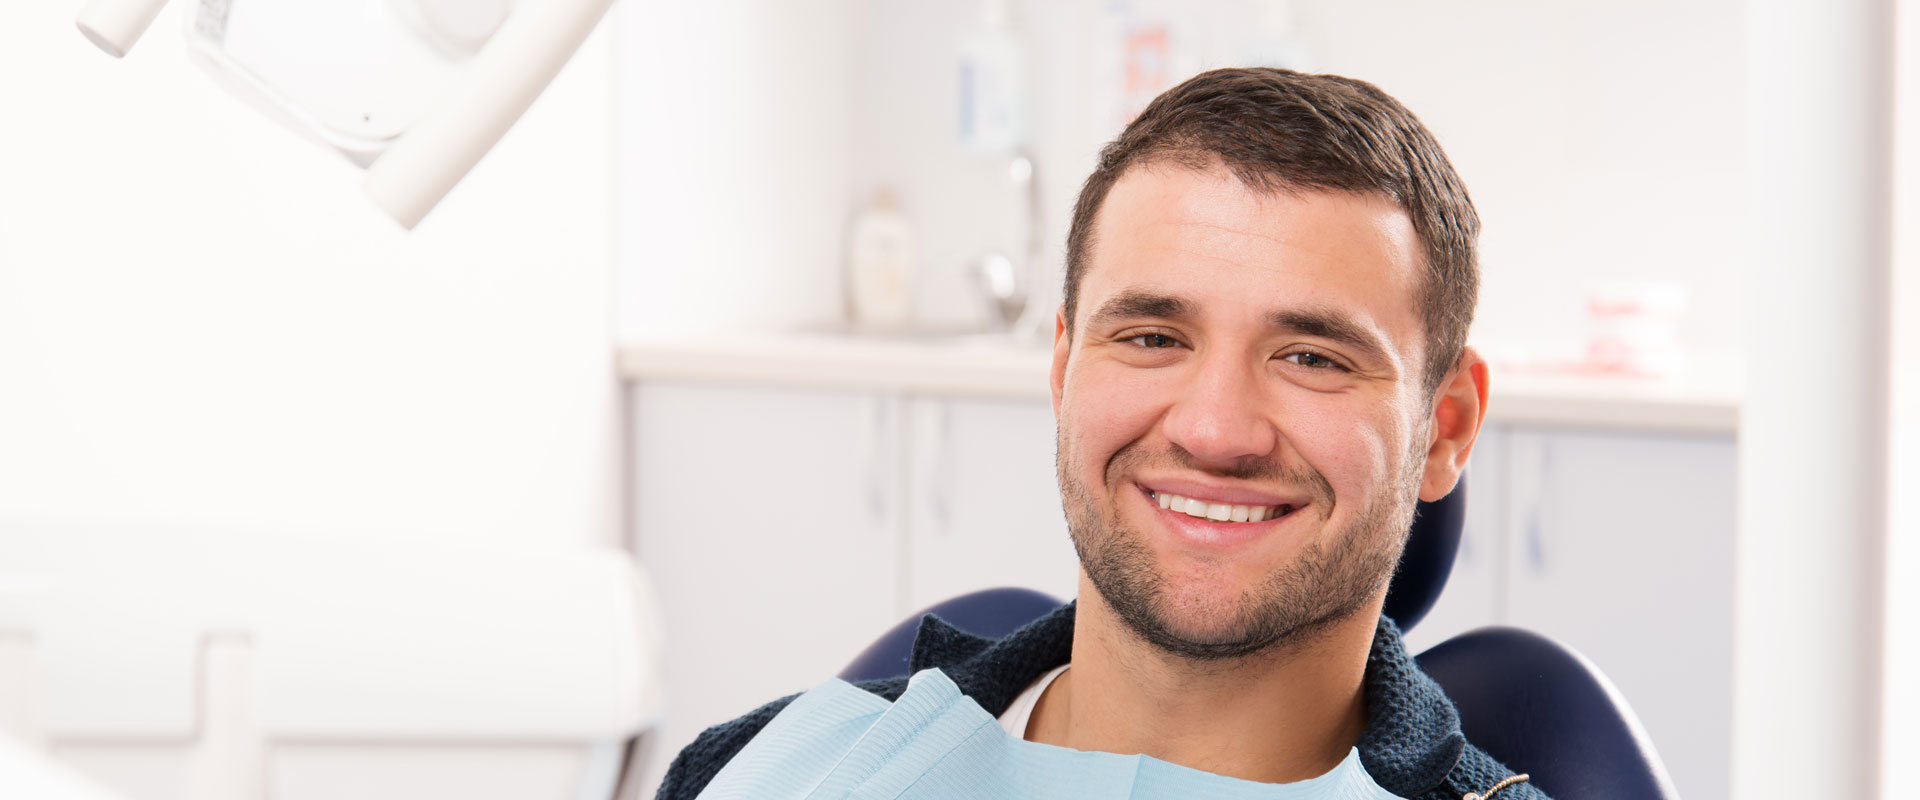 Smiling man sitting on dental chair